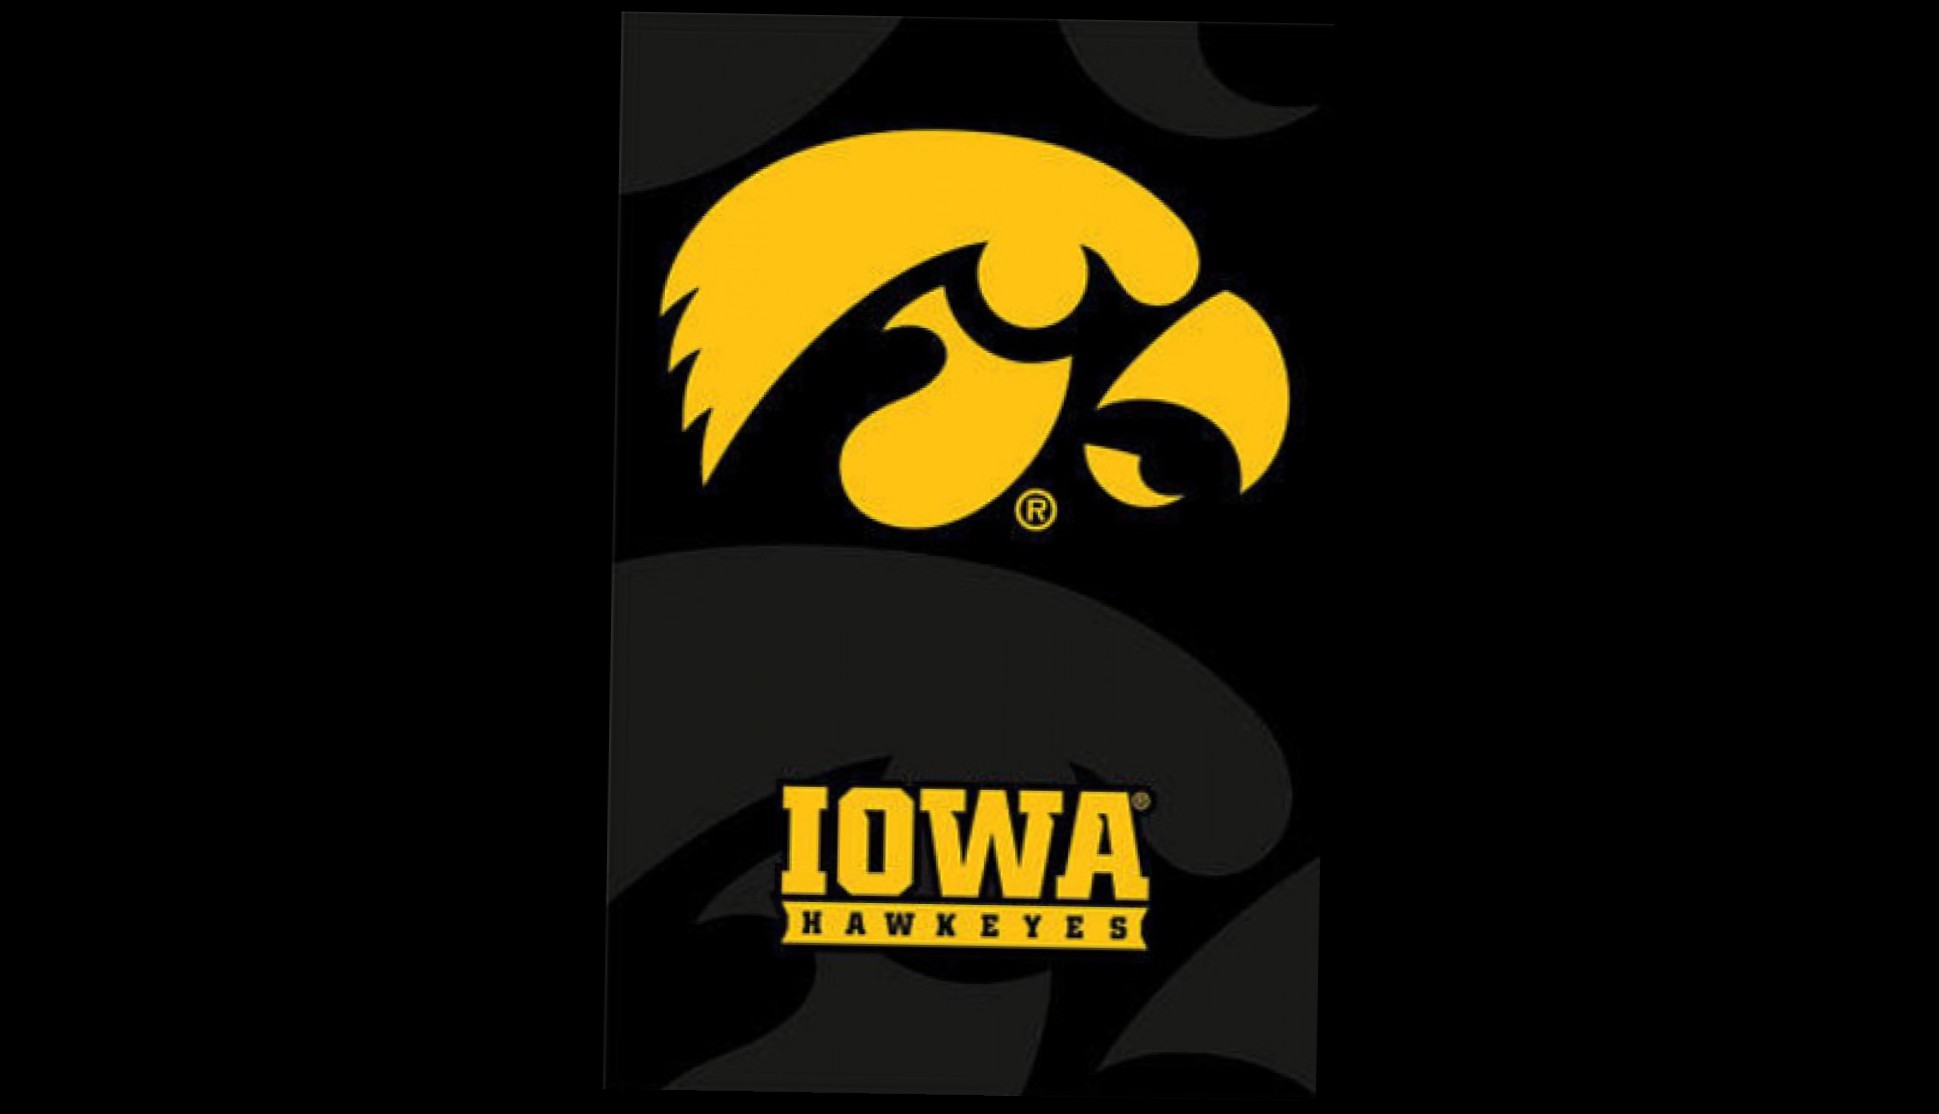 Iowa Hawkeyes IPhone Wallpaper.